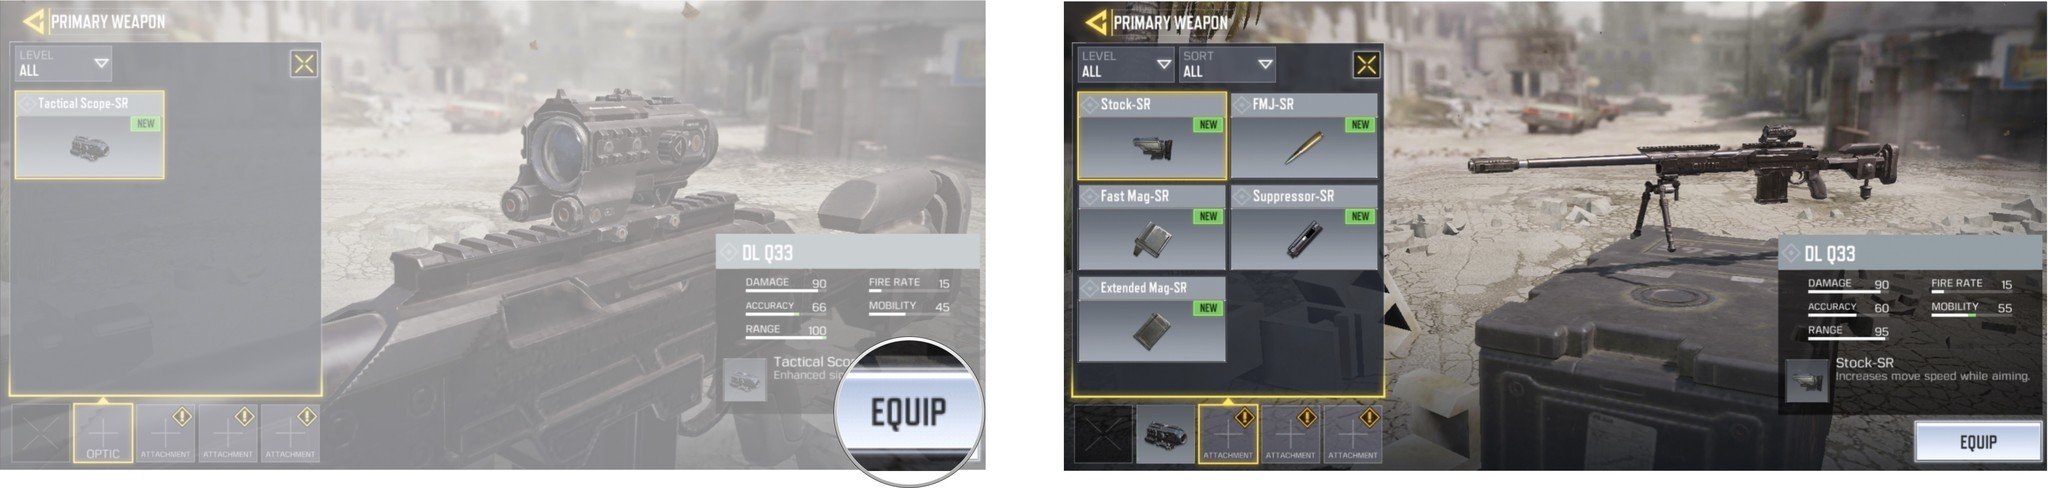 😚 ez 😚 Call Of Duty Mobile Upgrade Weapons callofduty.gamestips.club